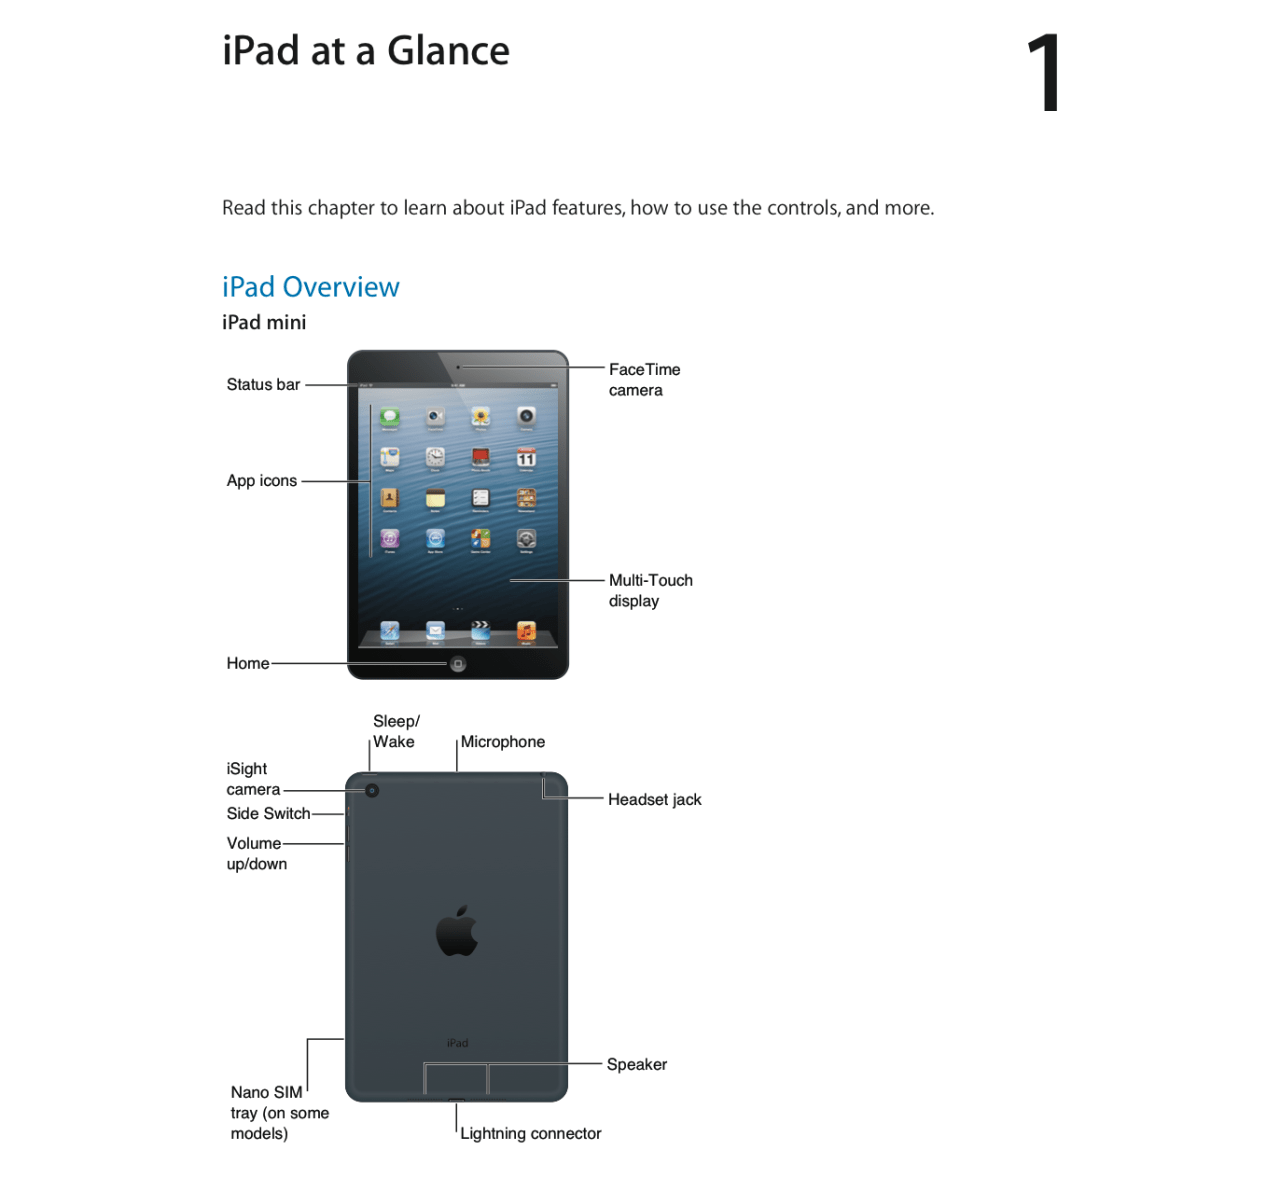 iClarified Apple News Apple Posts iPad Mini User Guide [Download]